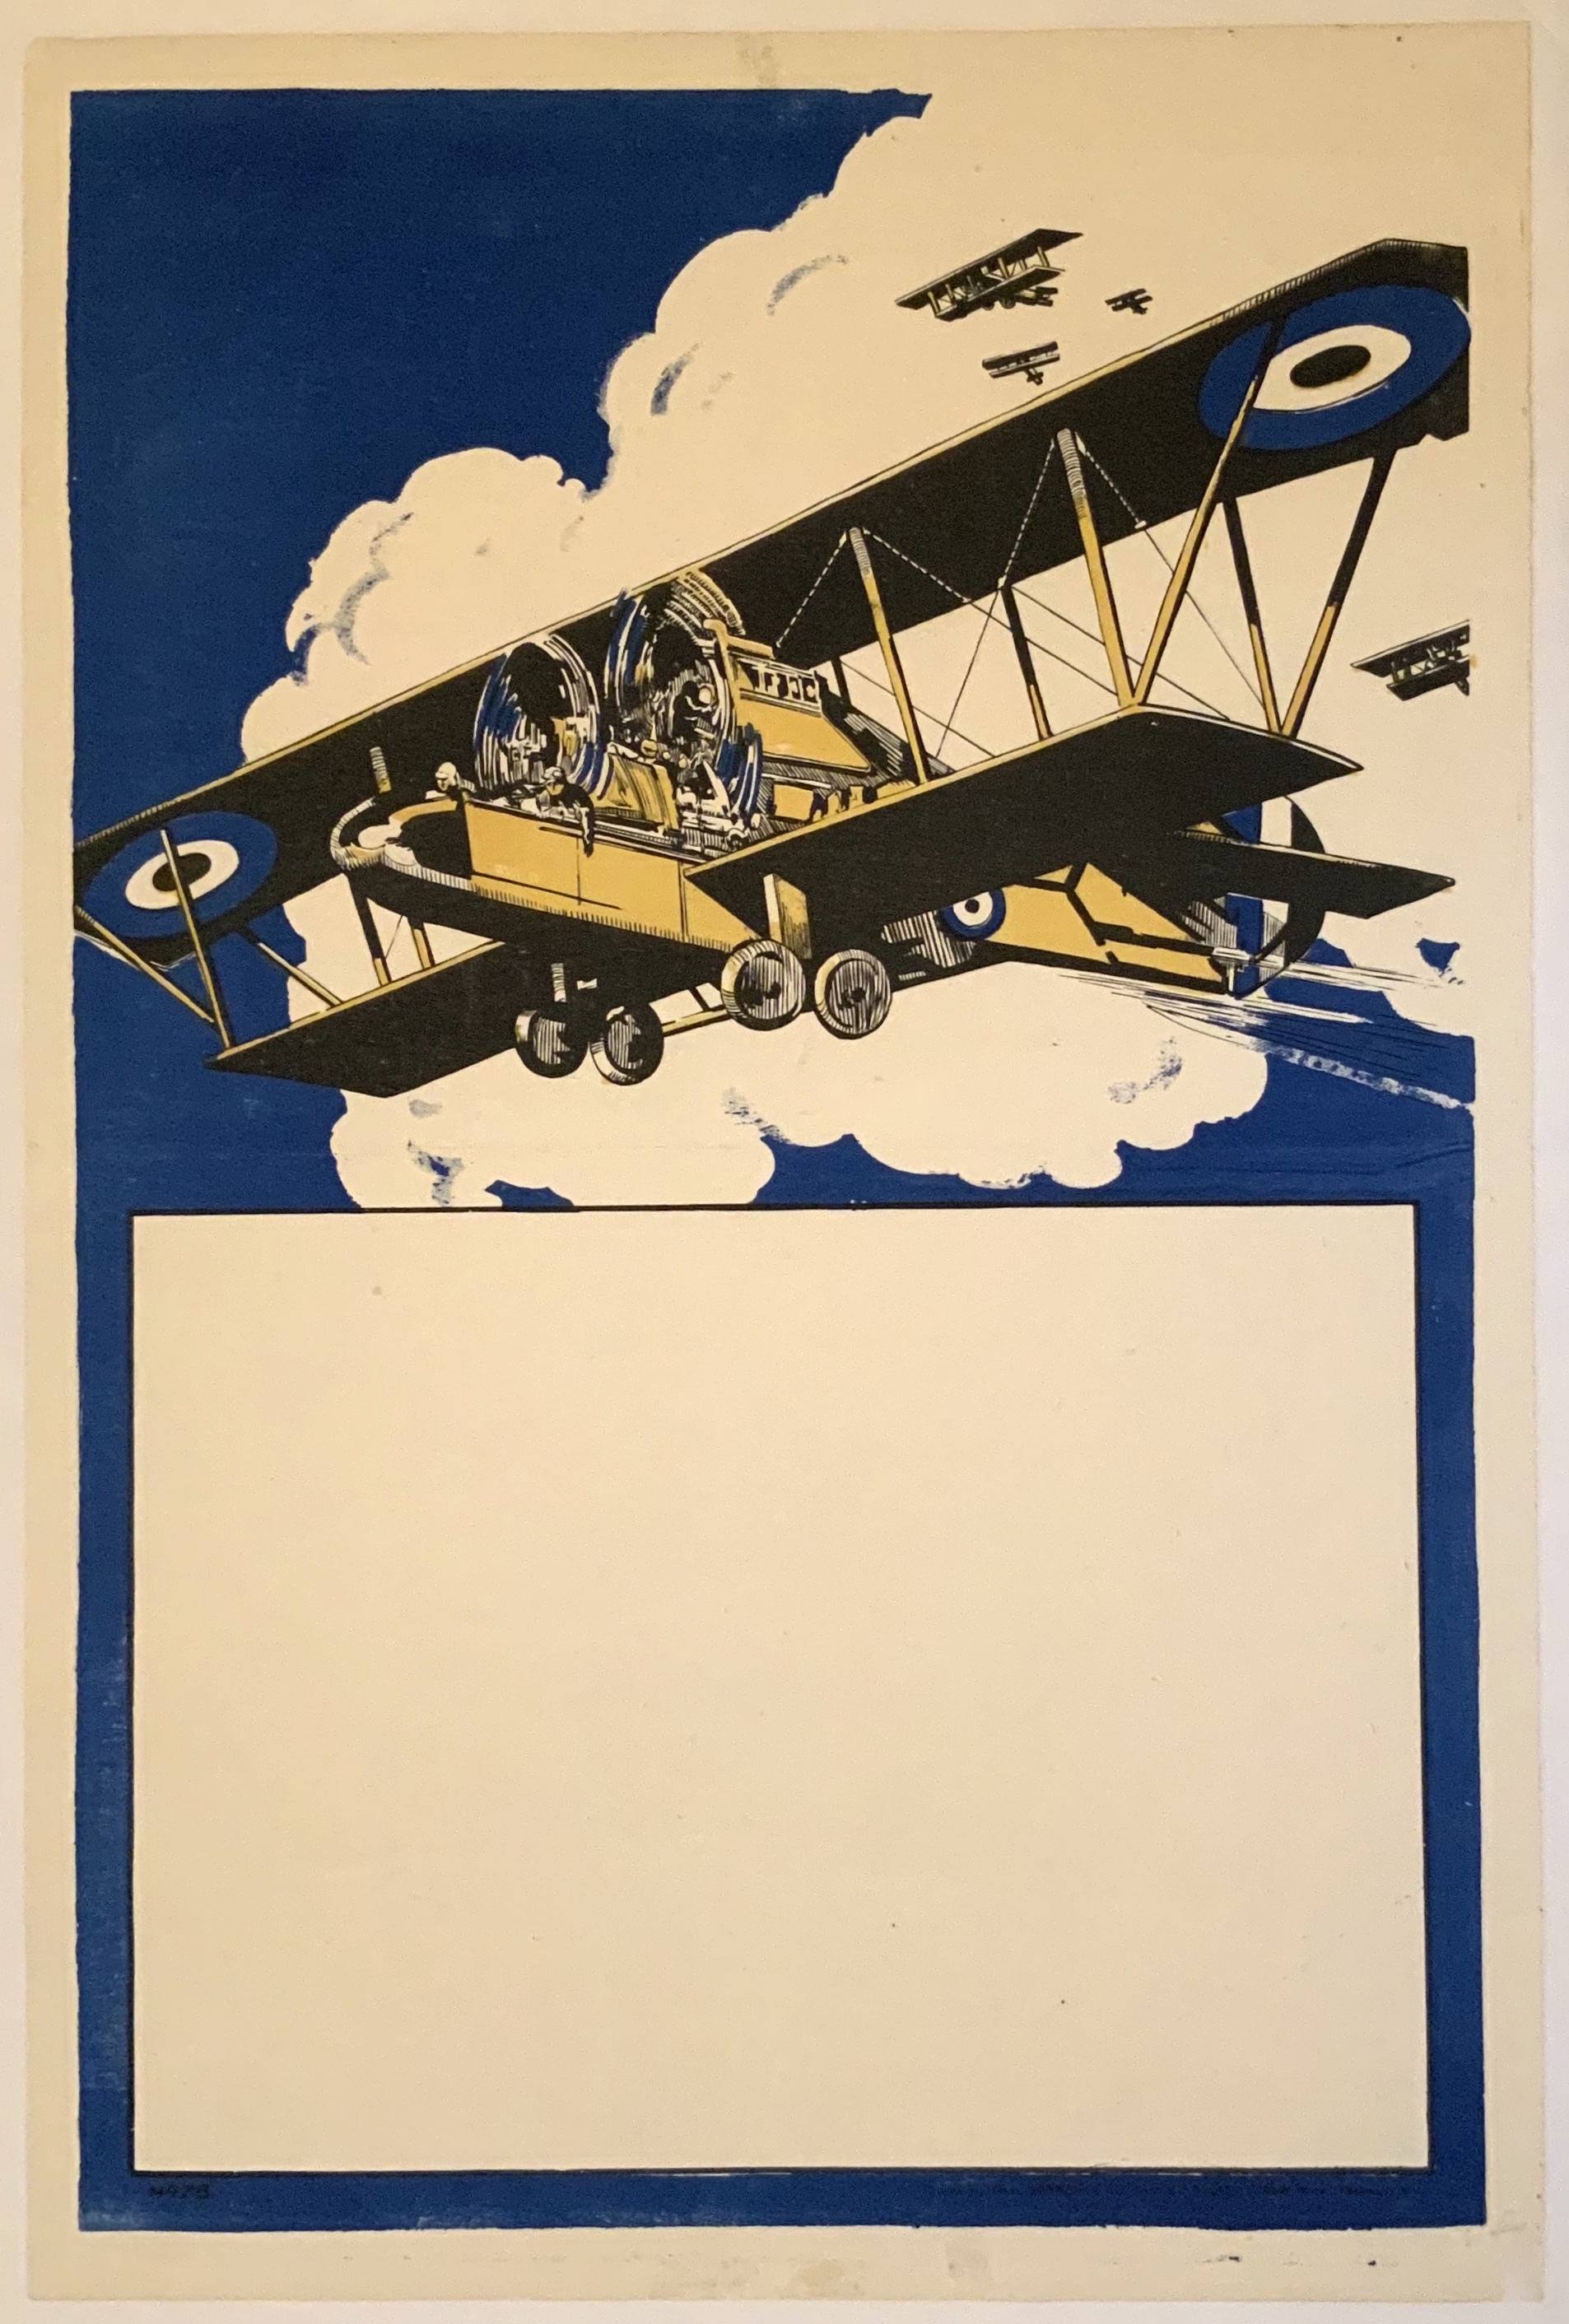 J618	BRITISH STOCK AIR SHOW POSTER CA. 1919-20